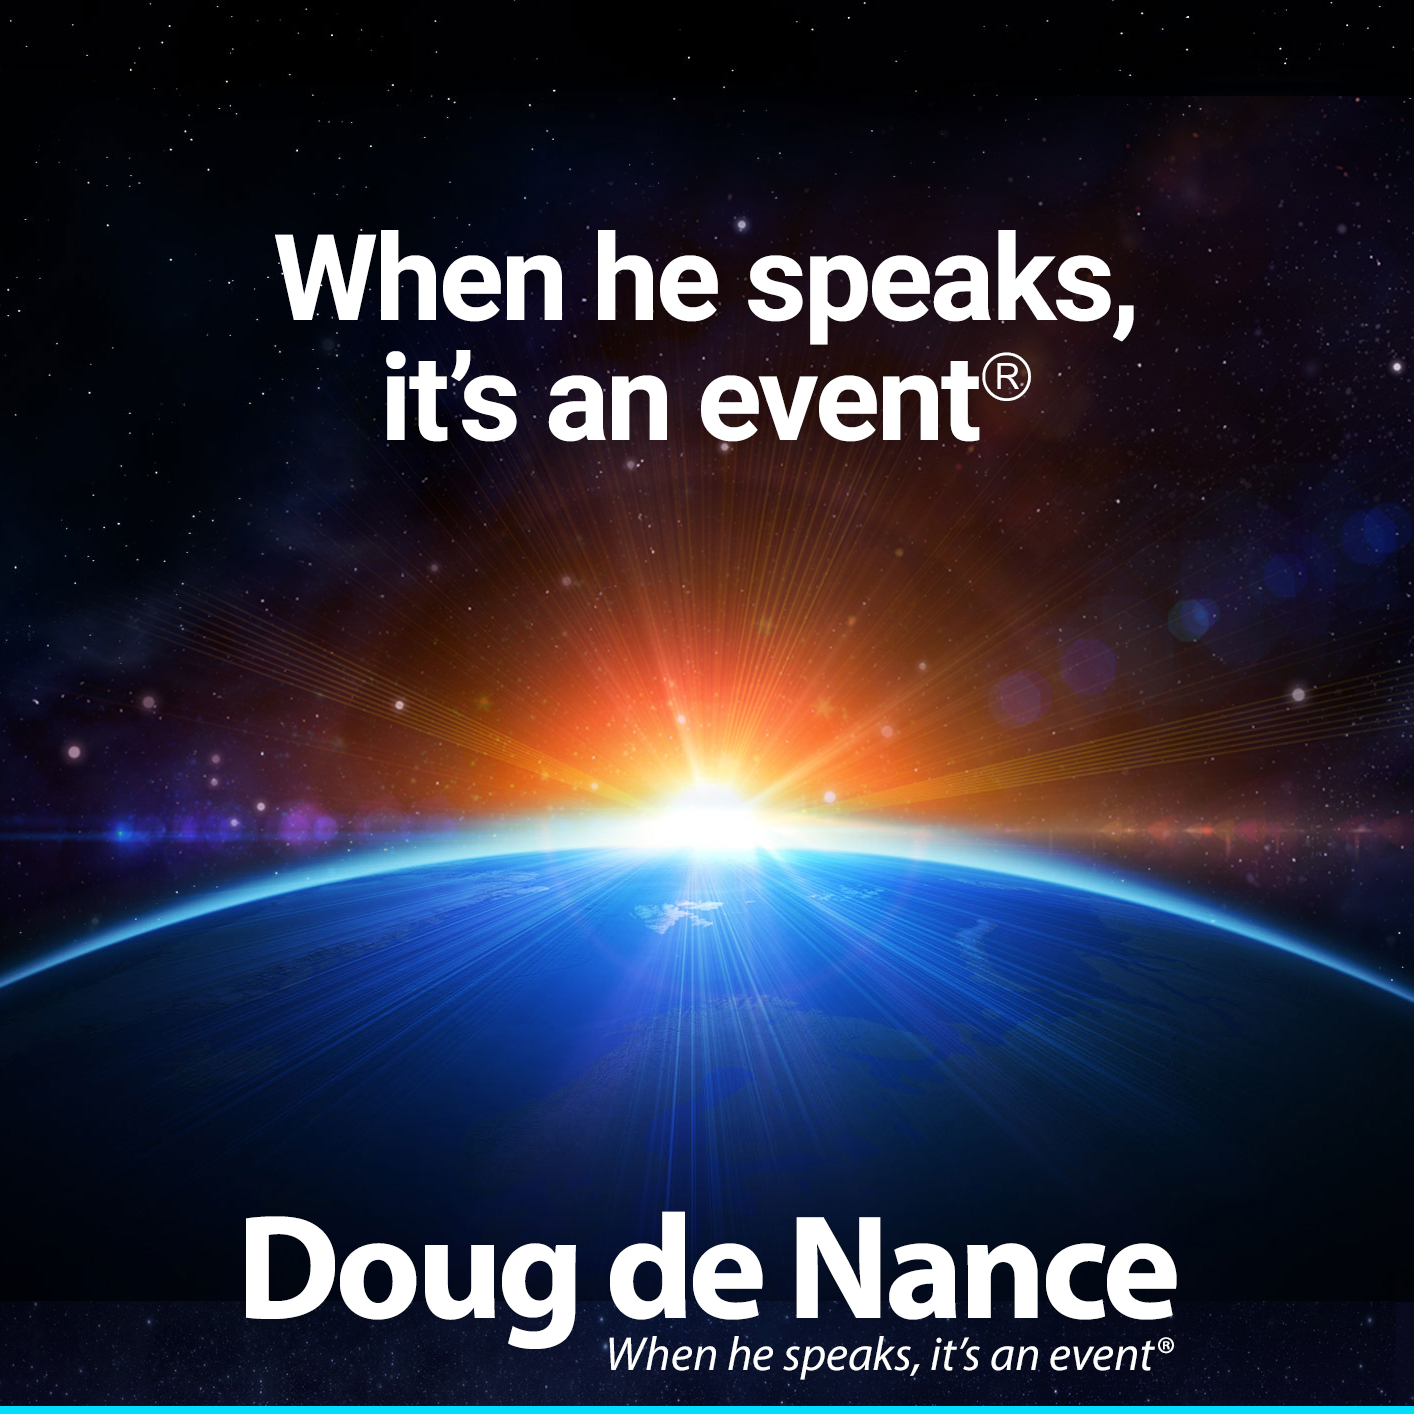 Doug de Nance: Live, virtual or hybrid